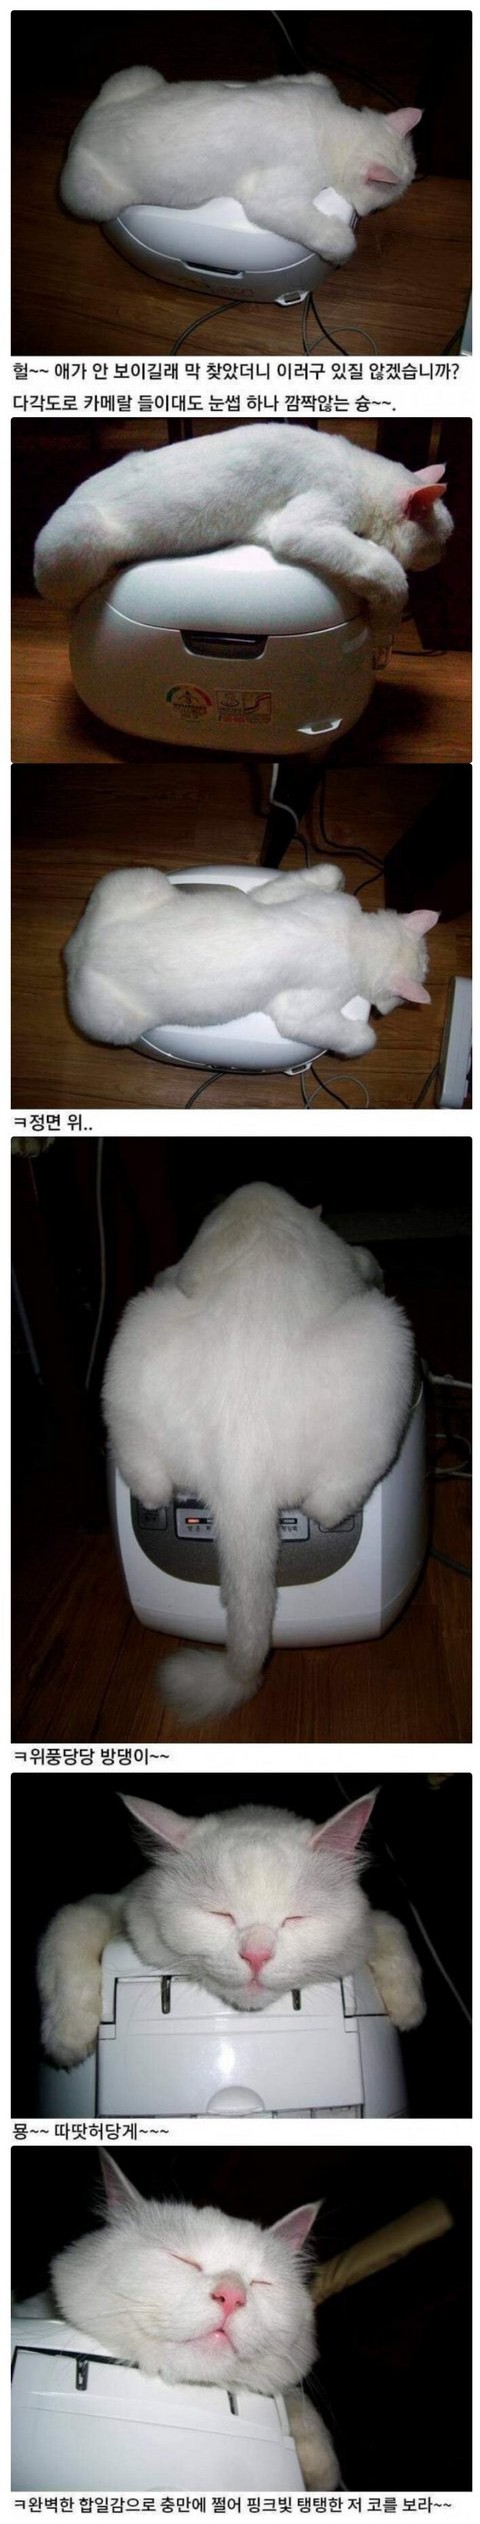 nokbeon.net-고양이 전용 난로-1번 이미지